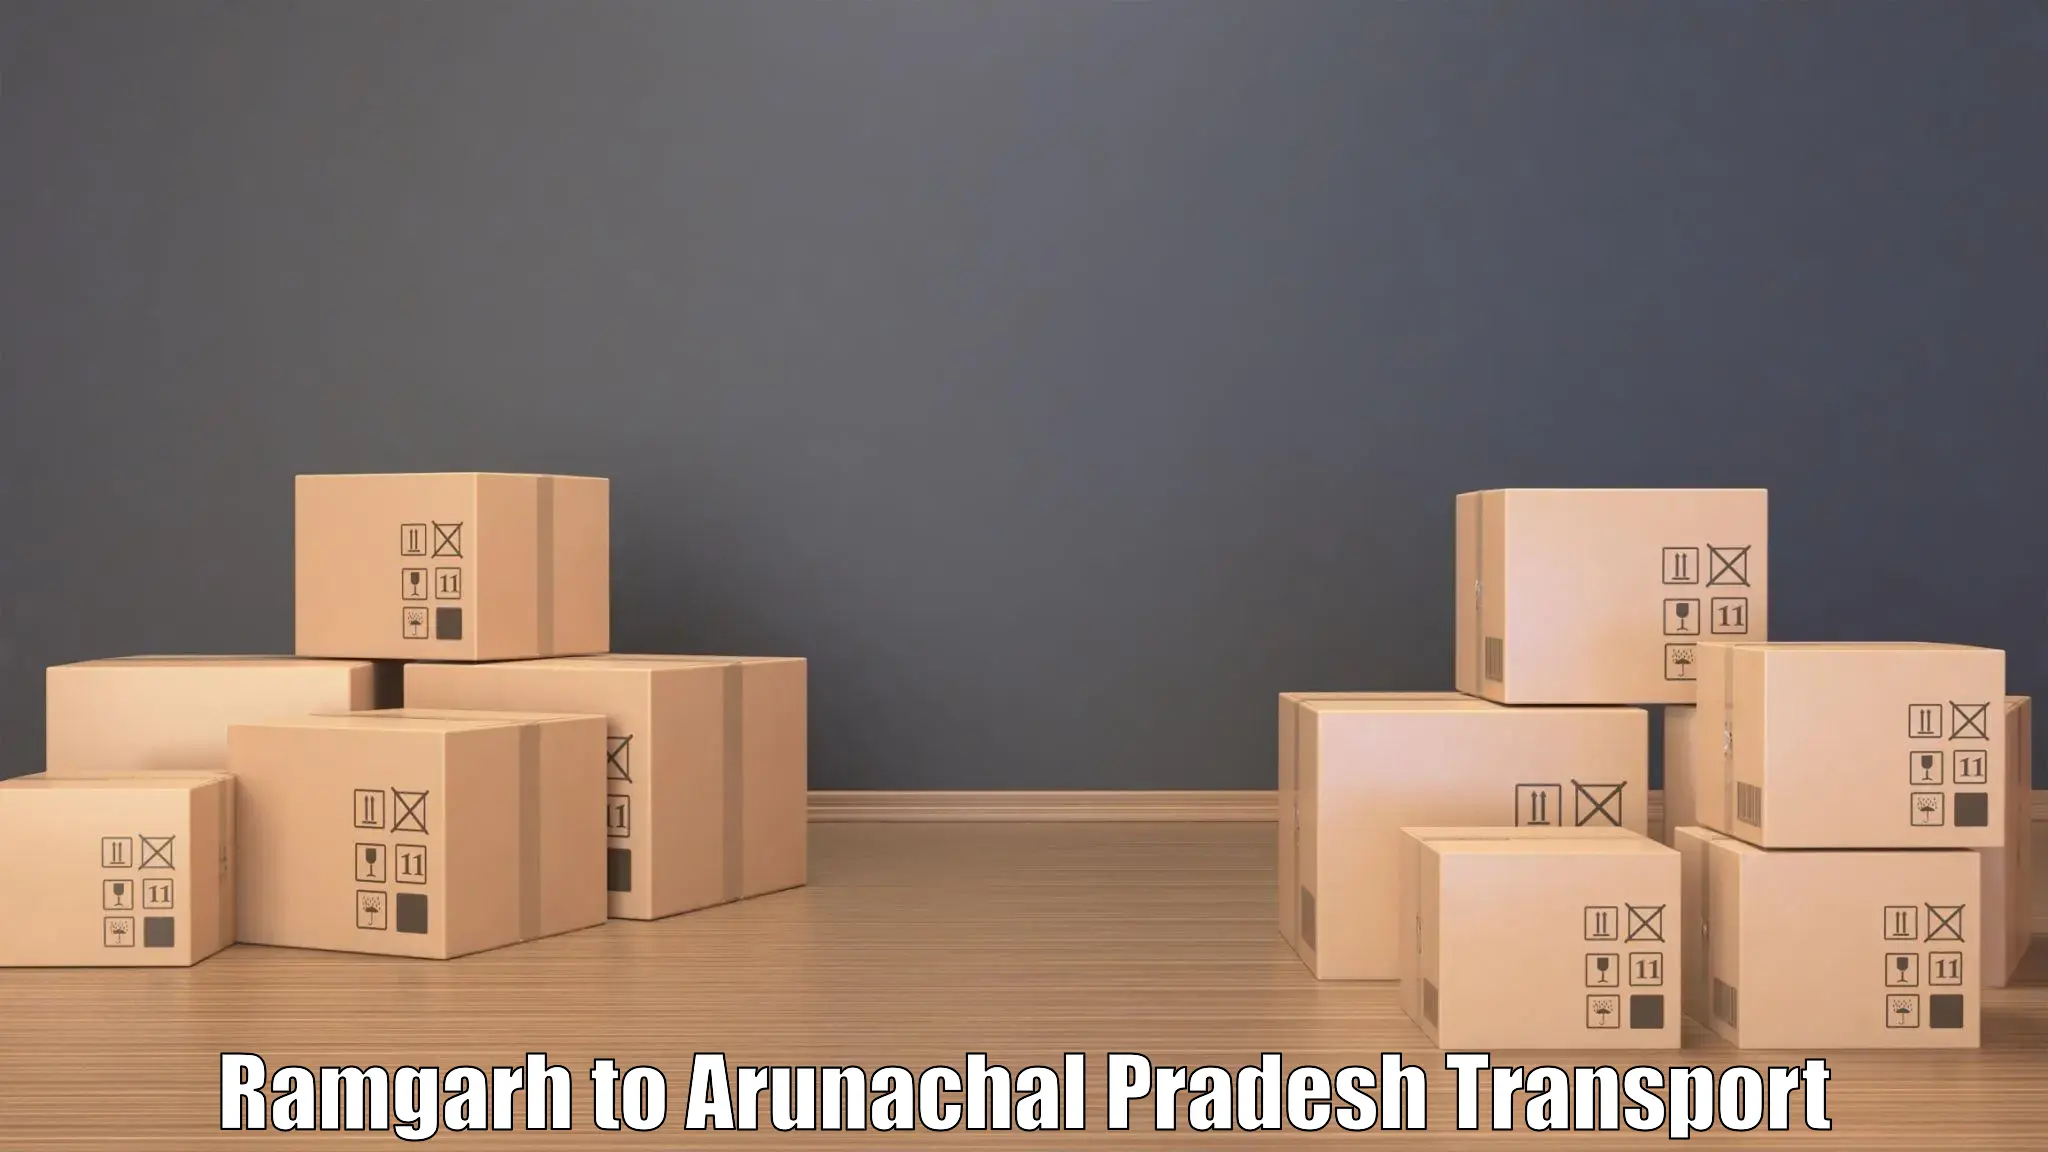 Delivery service Ramgarh to Arunachal Pradesh